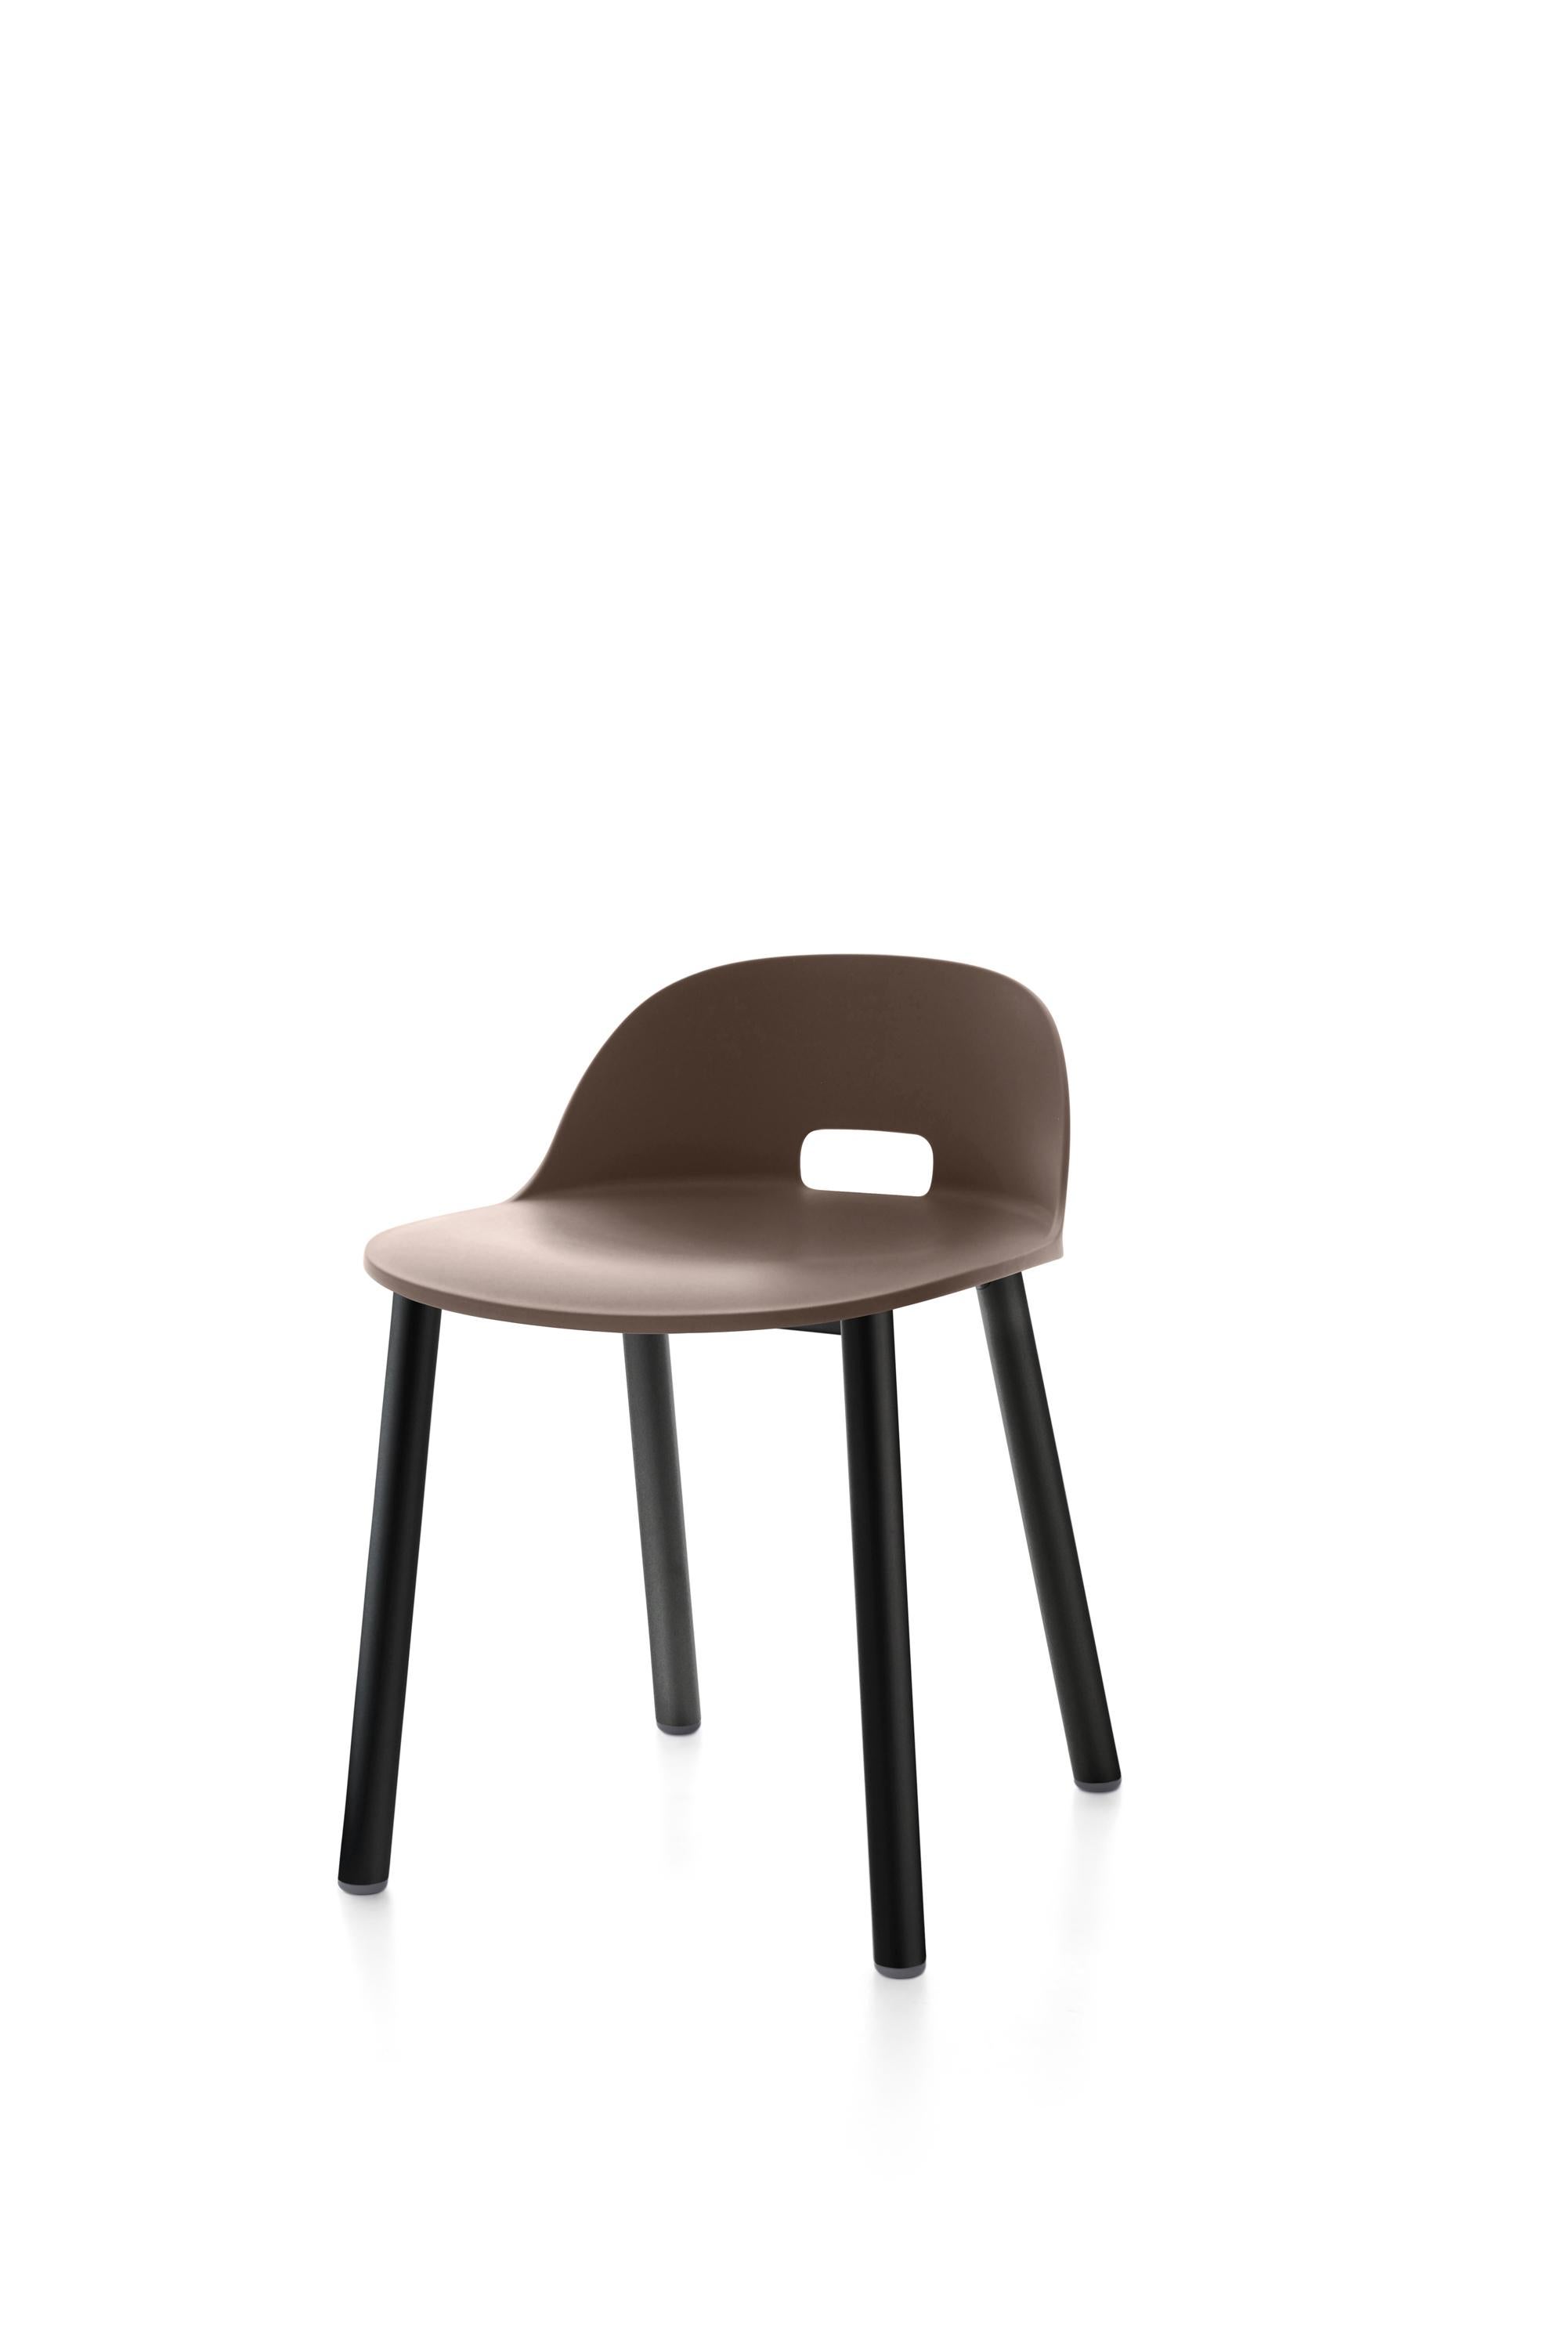 For Sale: Brown (Alfi Dark Brown) Emeco Alfi Low Back Chair with Black Powder-Coated Aluminum Frame by Jasper